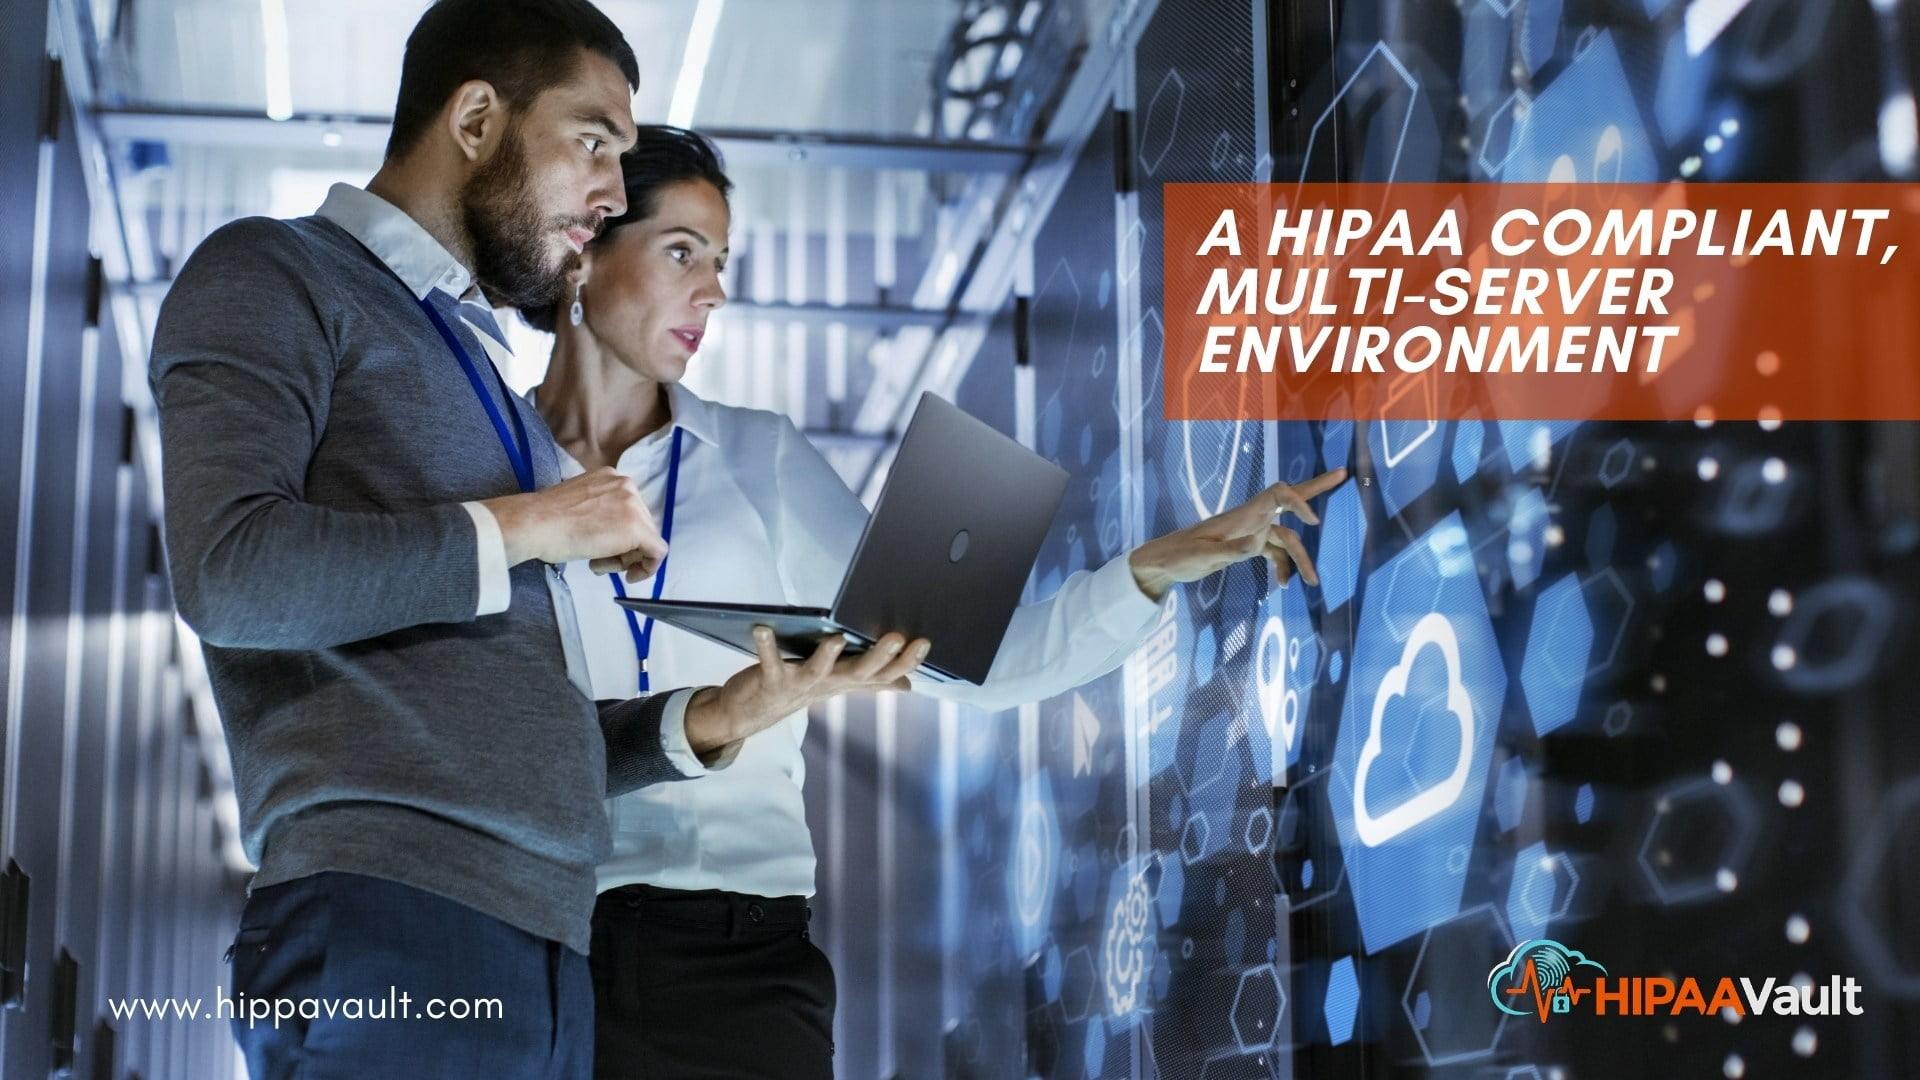 A HIPAA Compliant, Multi-Server Environment